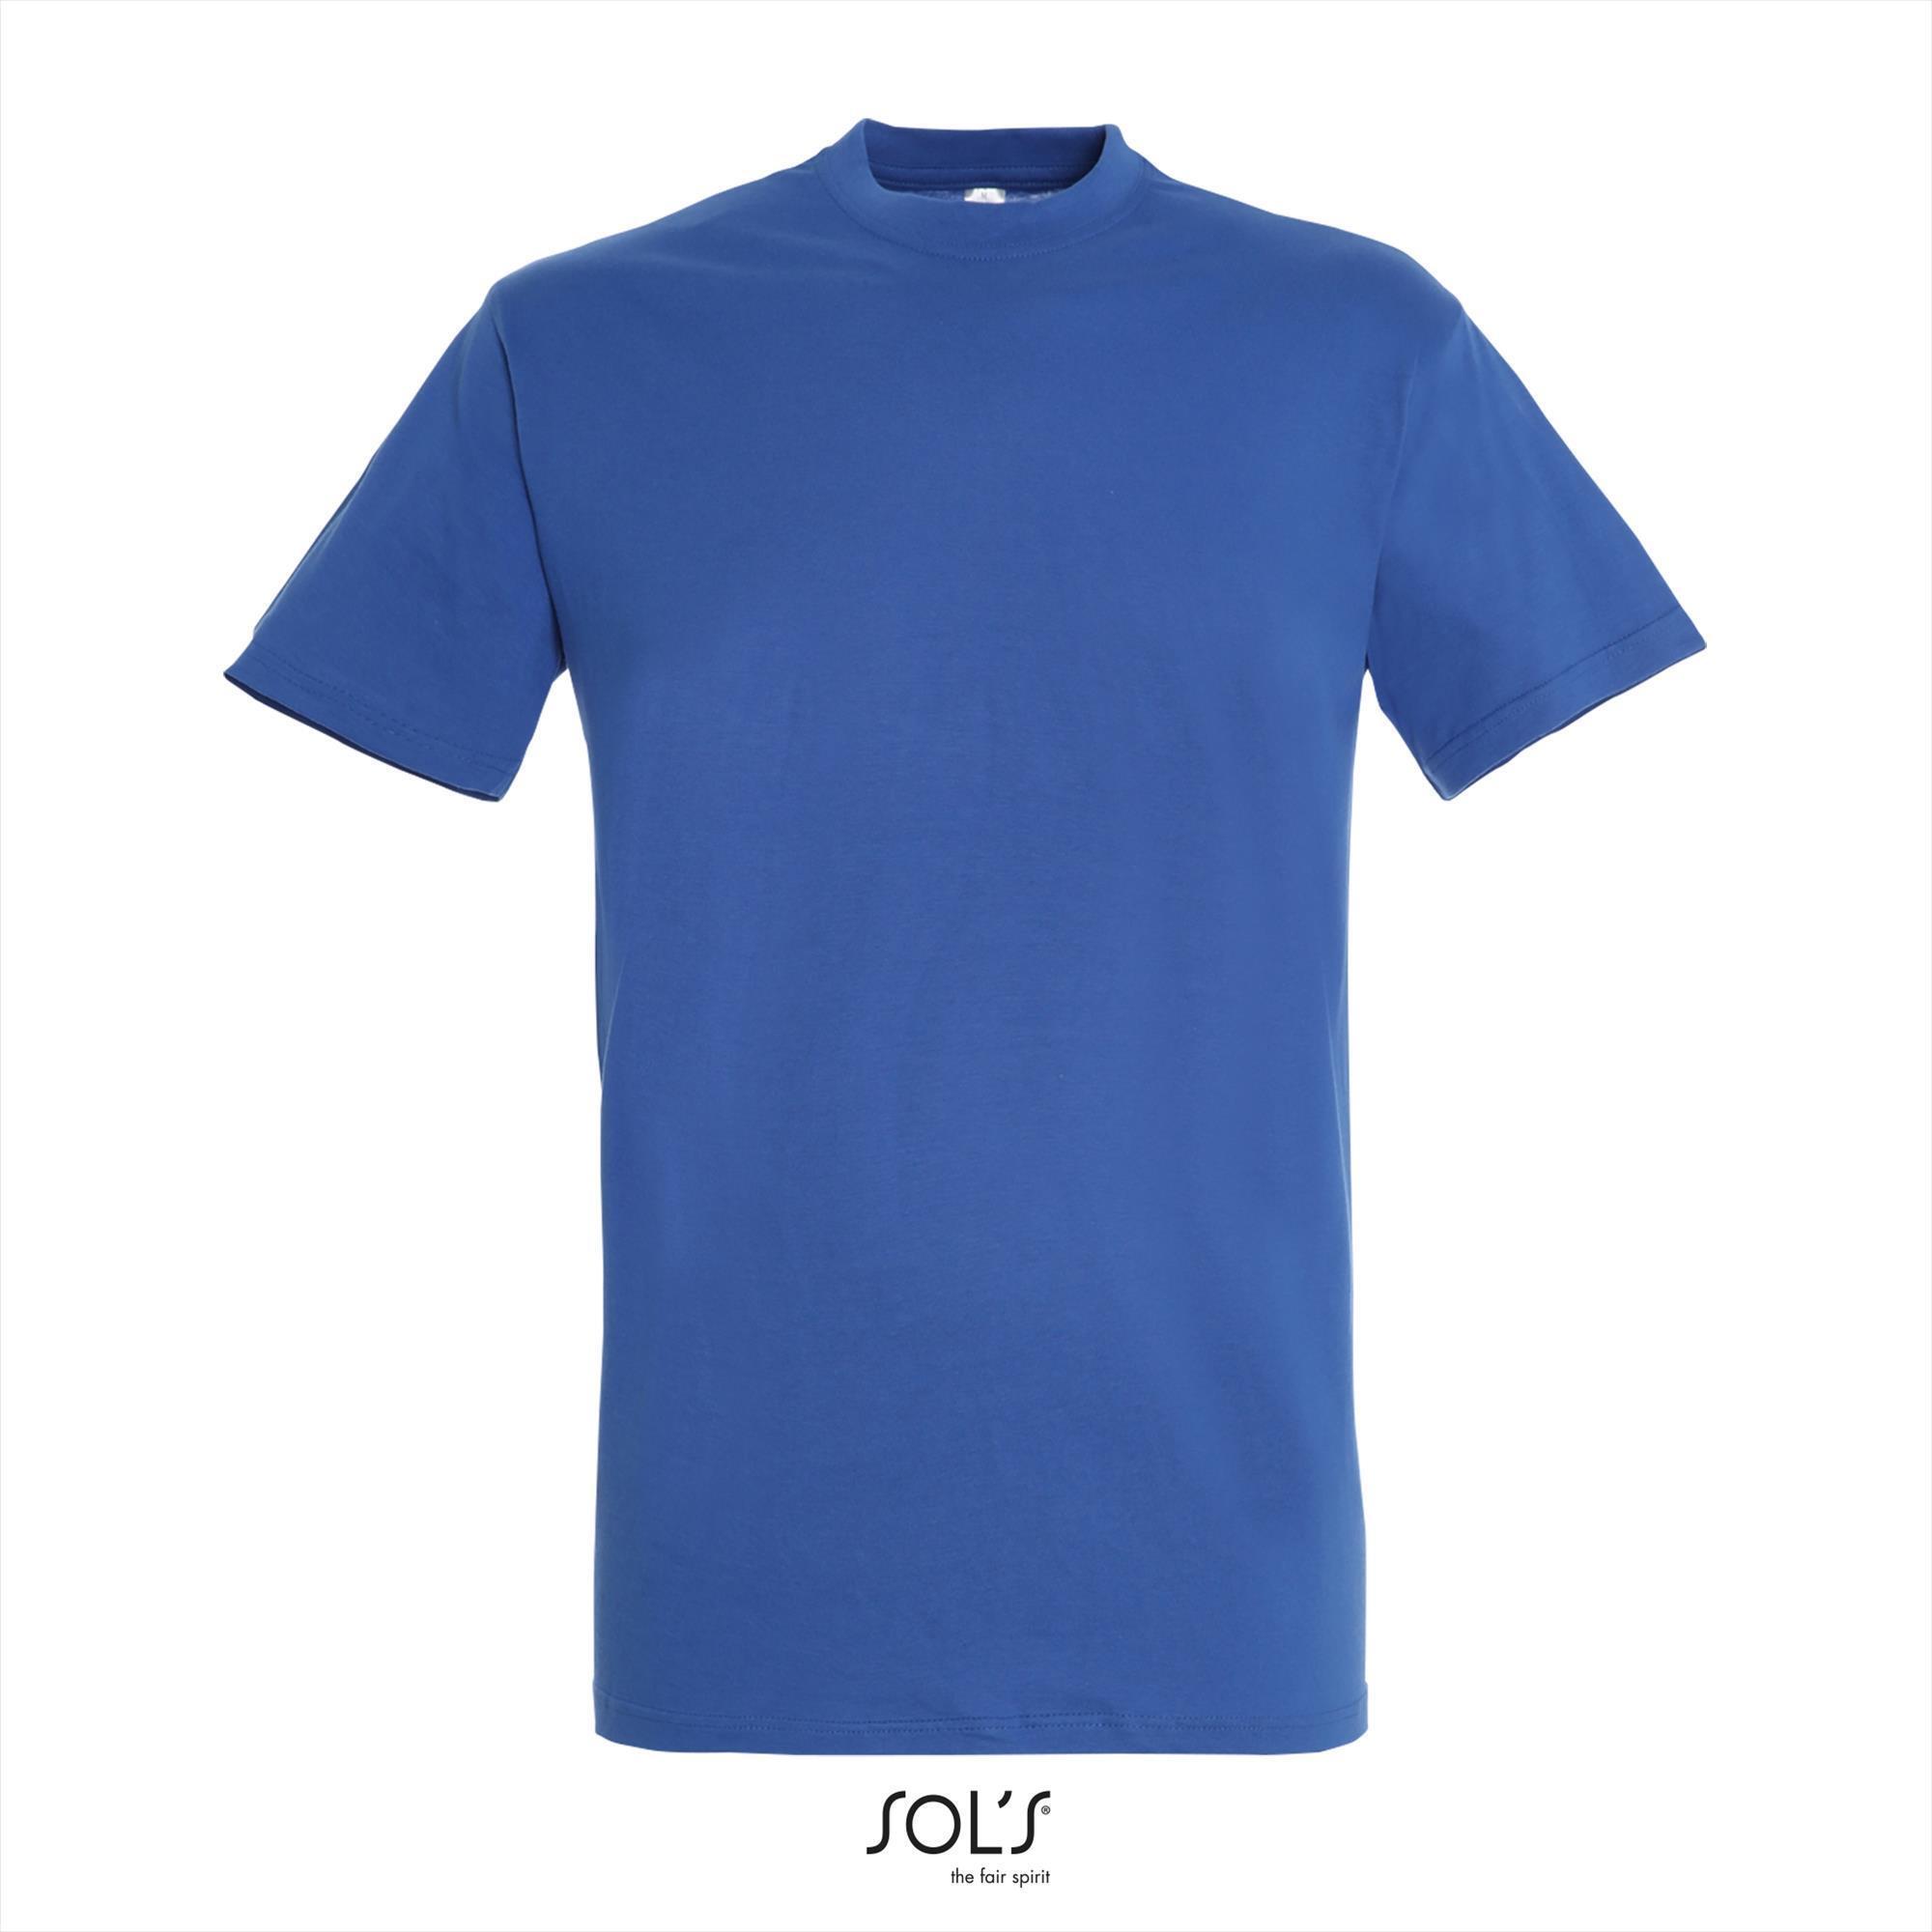 Heren T-shirt met een ronde hals mannen shirt royal blue blauw